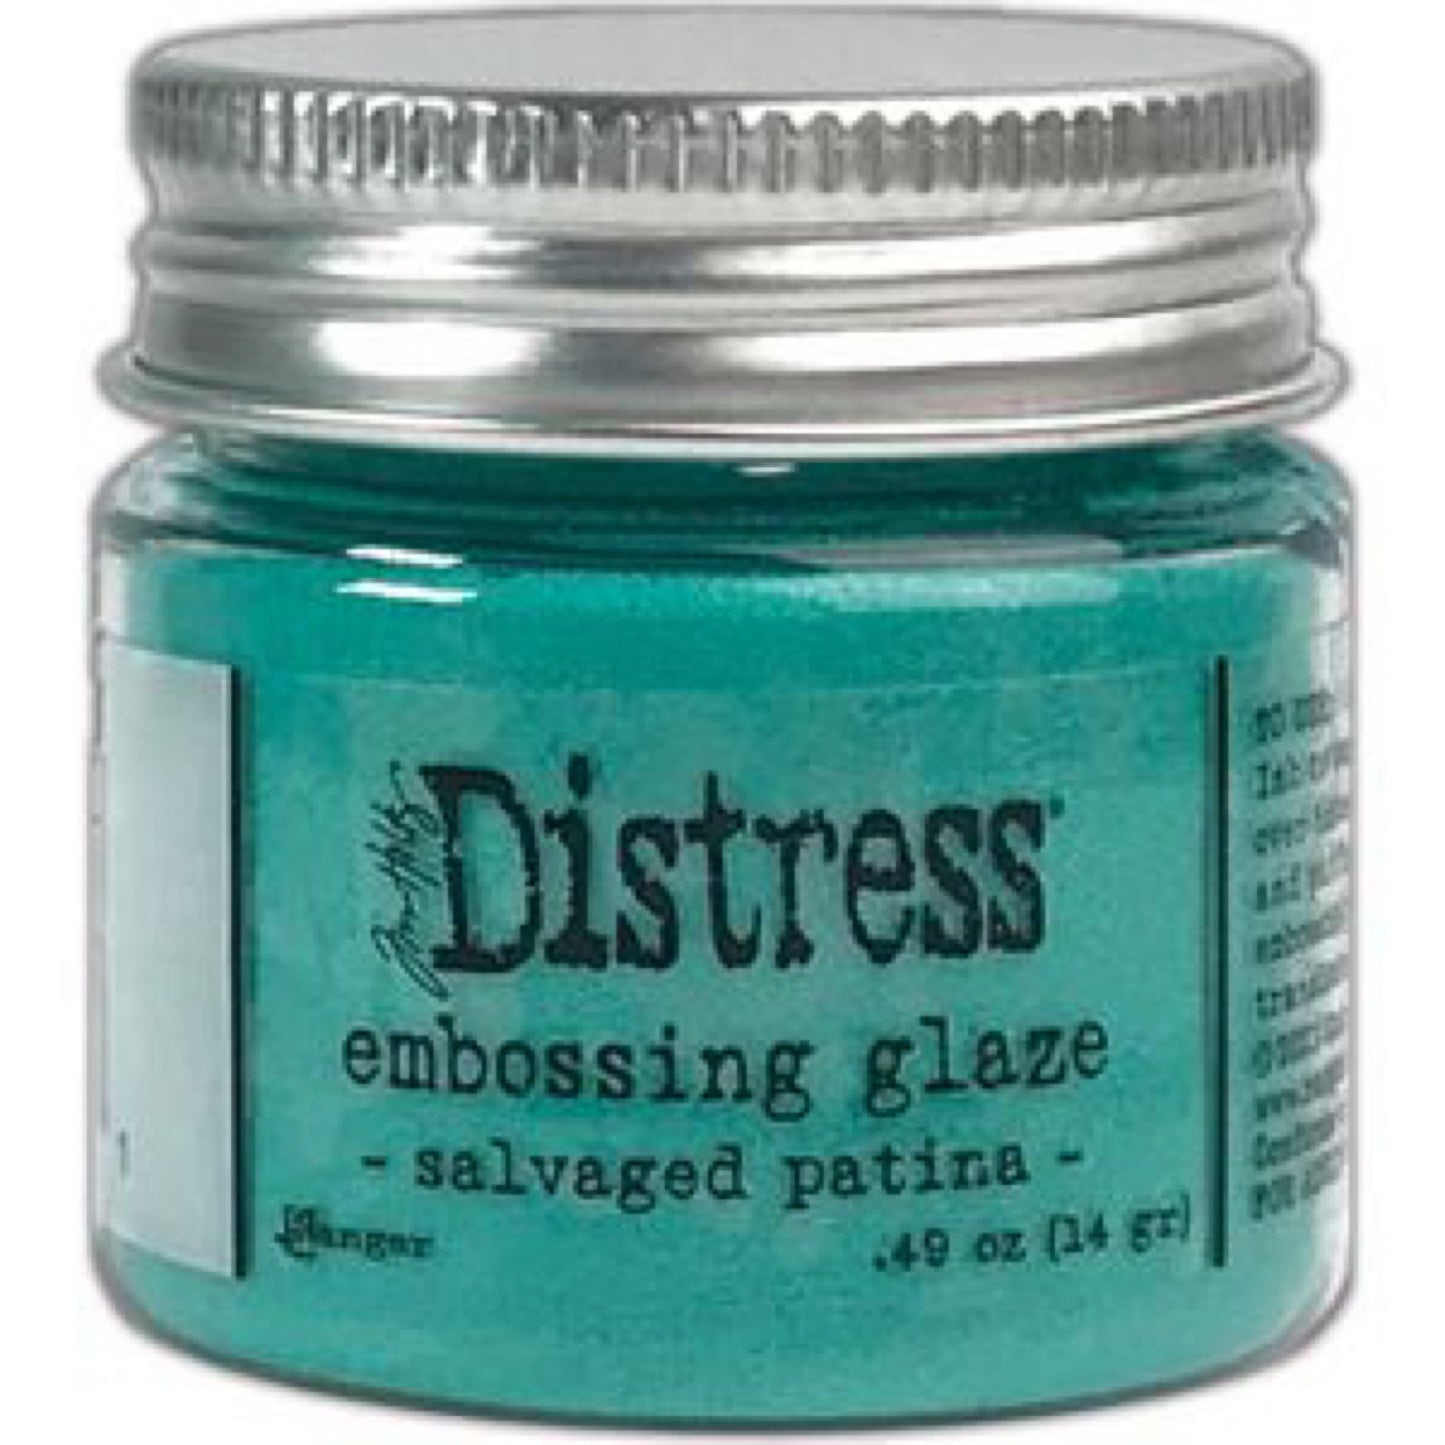 Distress embossing glaze / embossingpulver - Salvaged patina